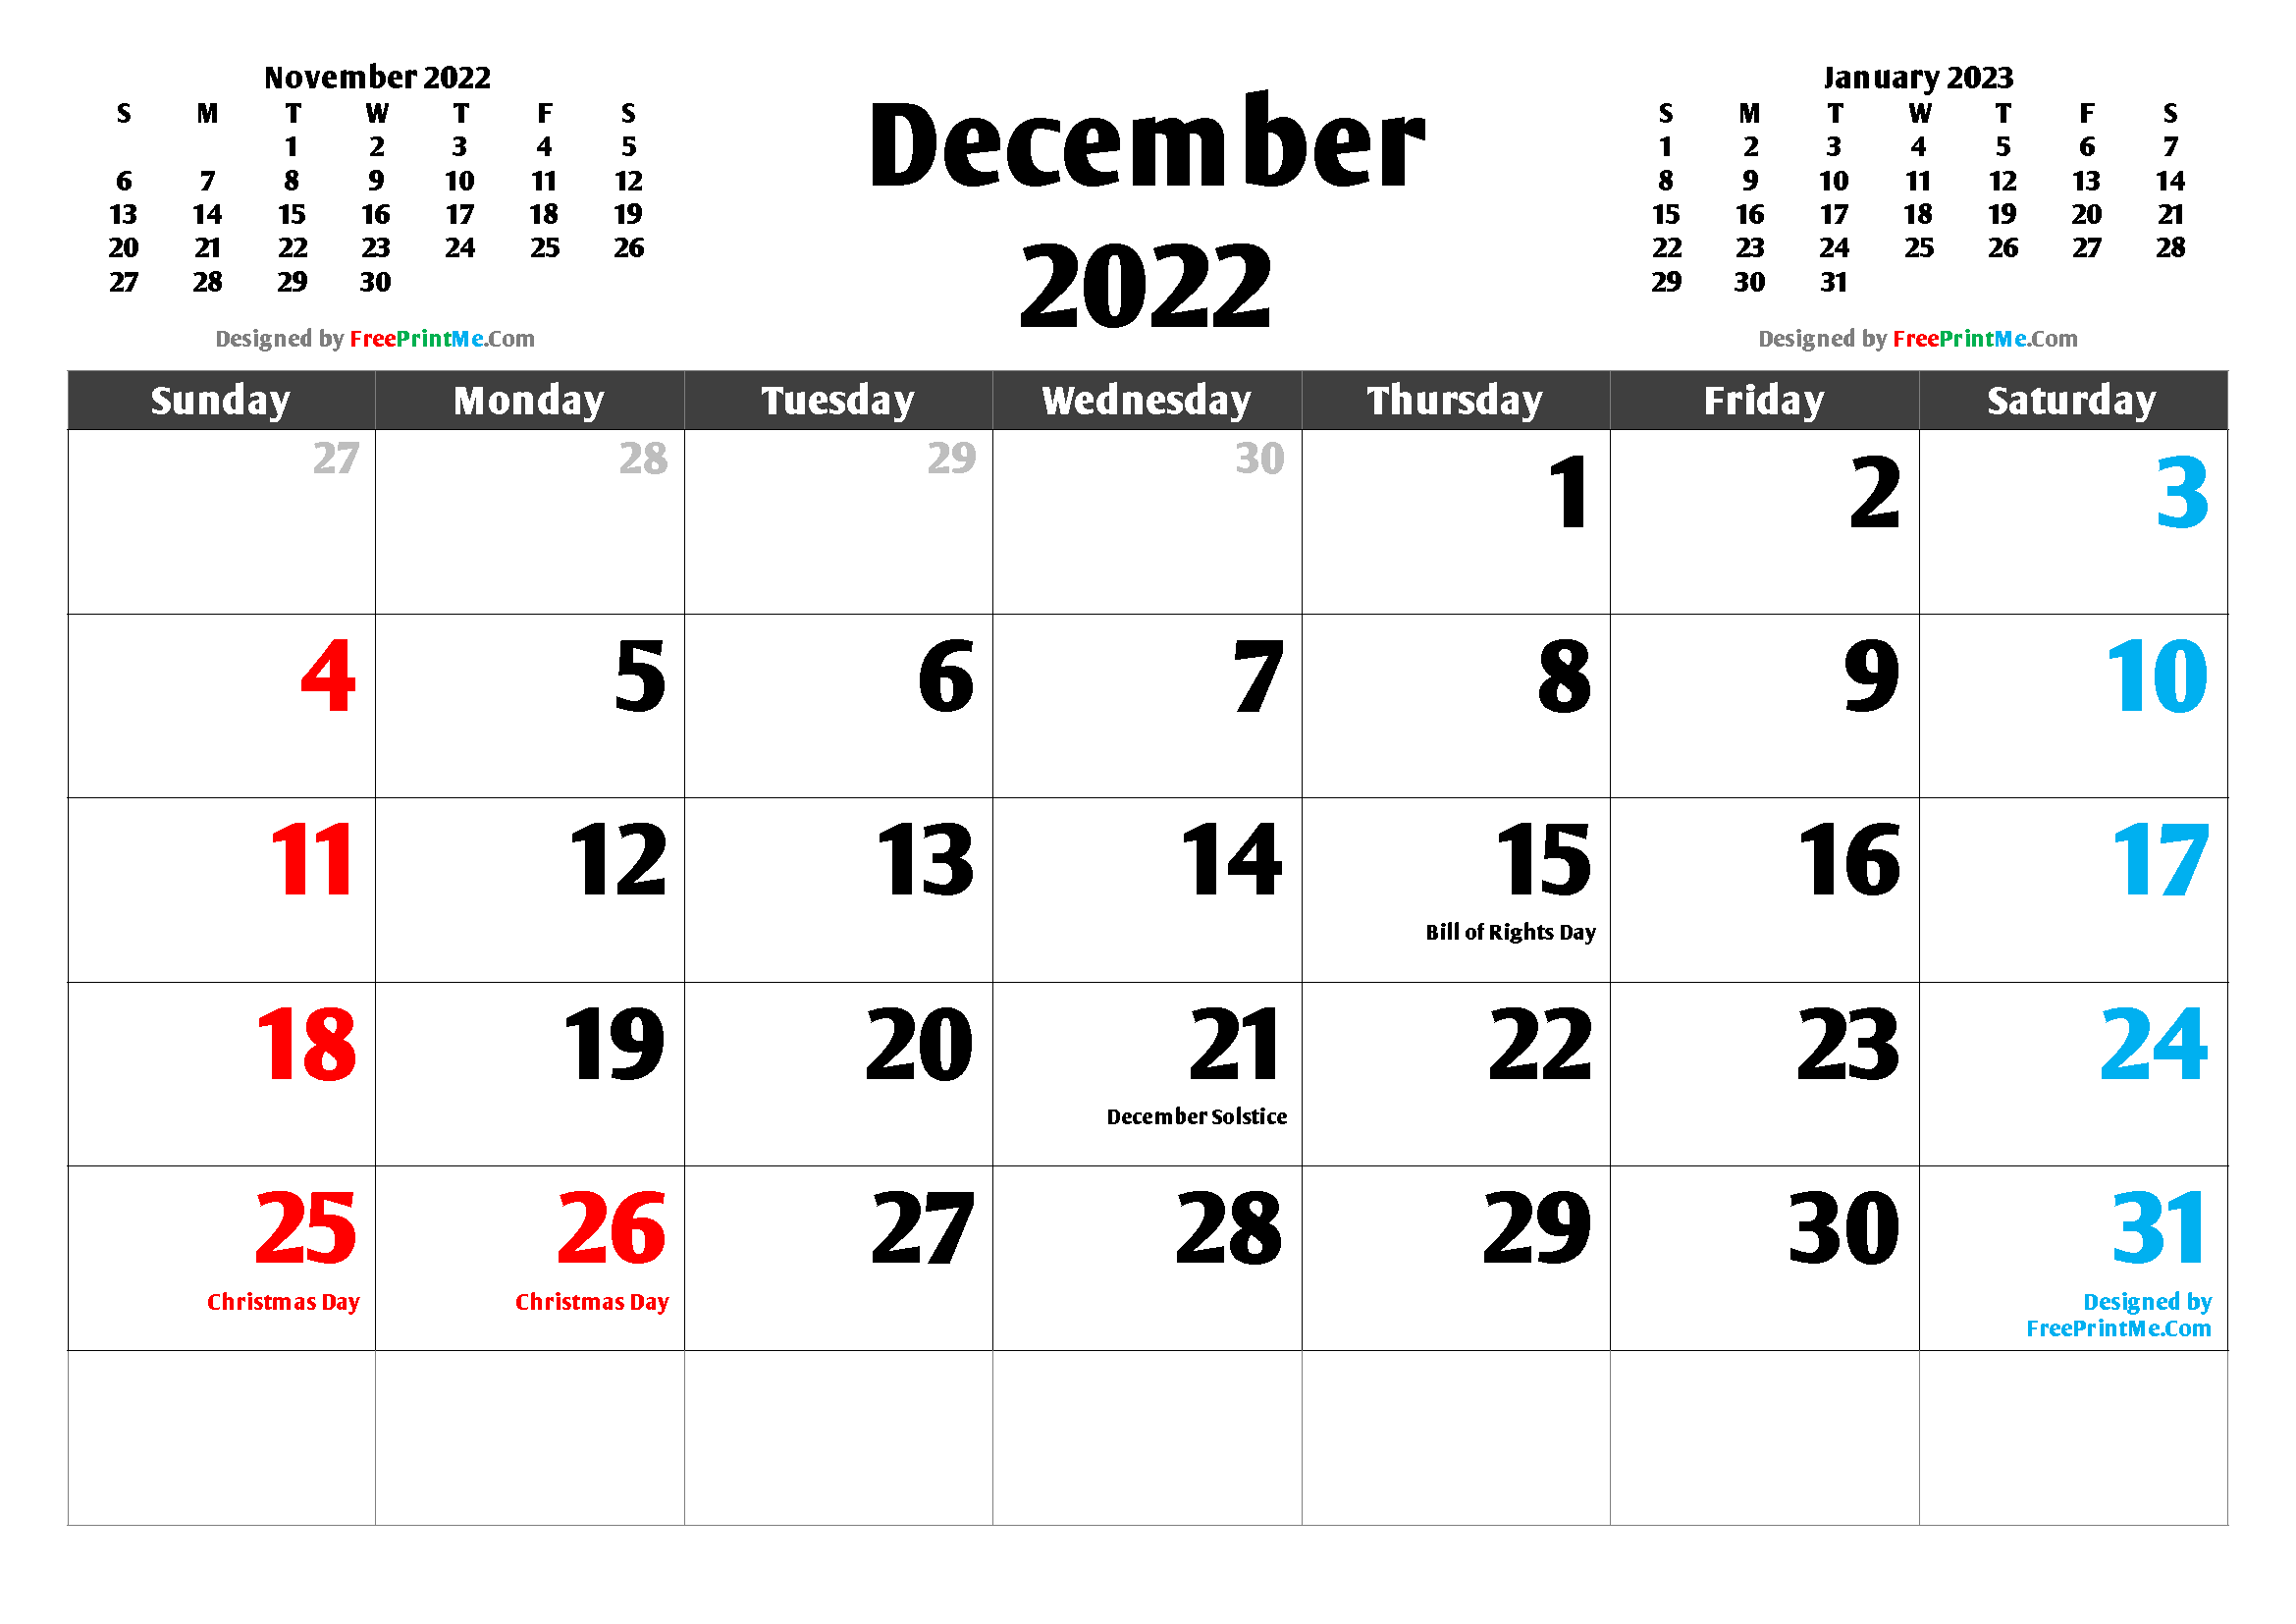 December 2022 Calendar Free Printable December 2022 Calendar Pdf, Png Image